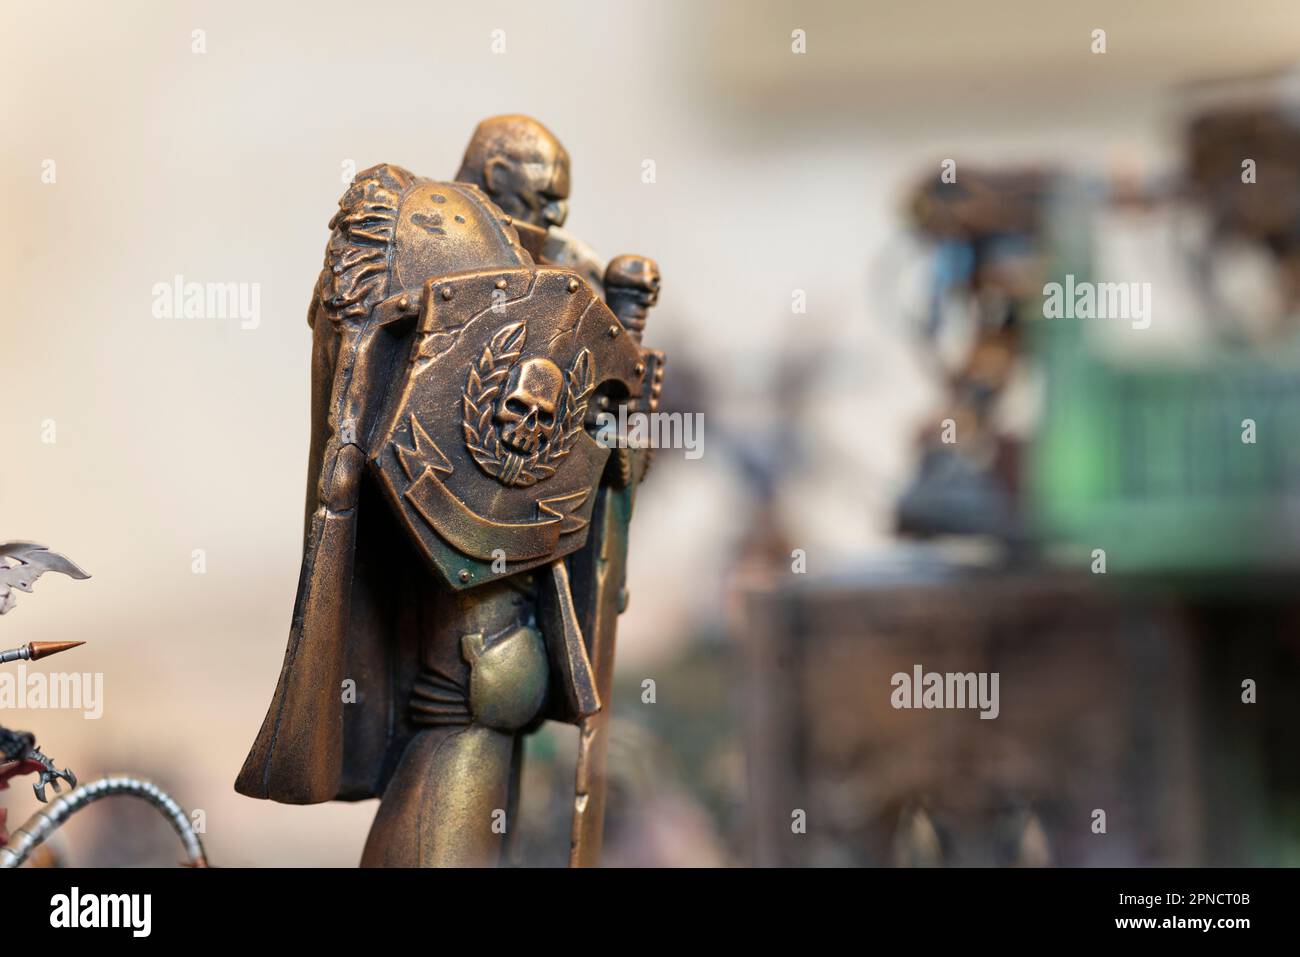 Jeu de figurines d'action, figurine miniature Warhammer 40 000 Banque D'Images